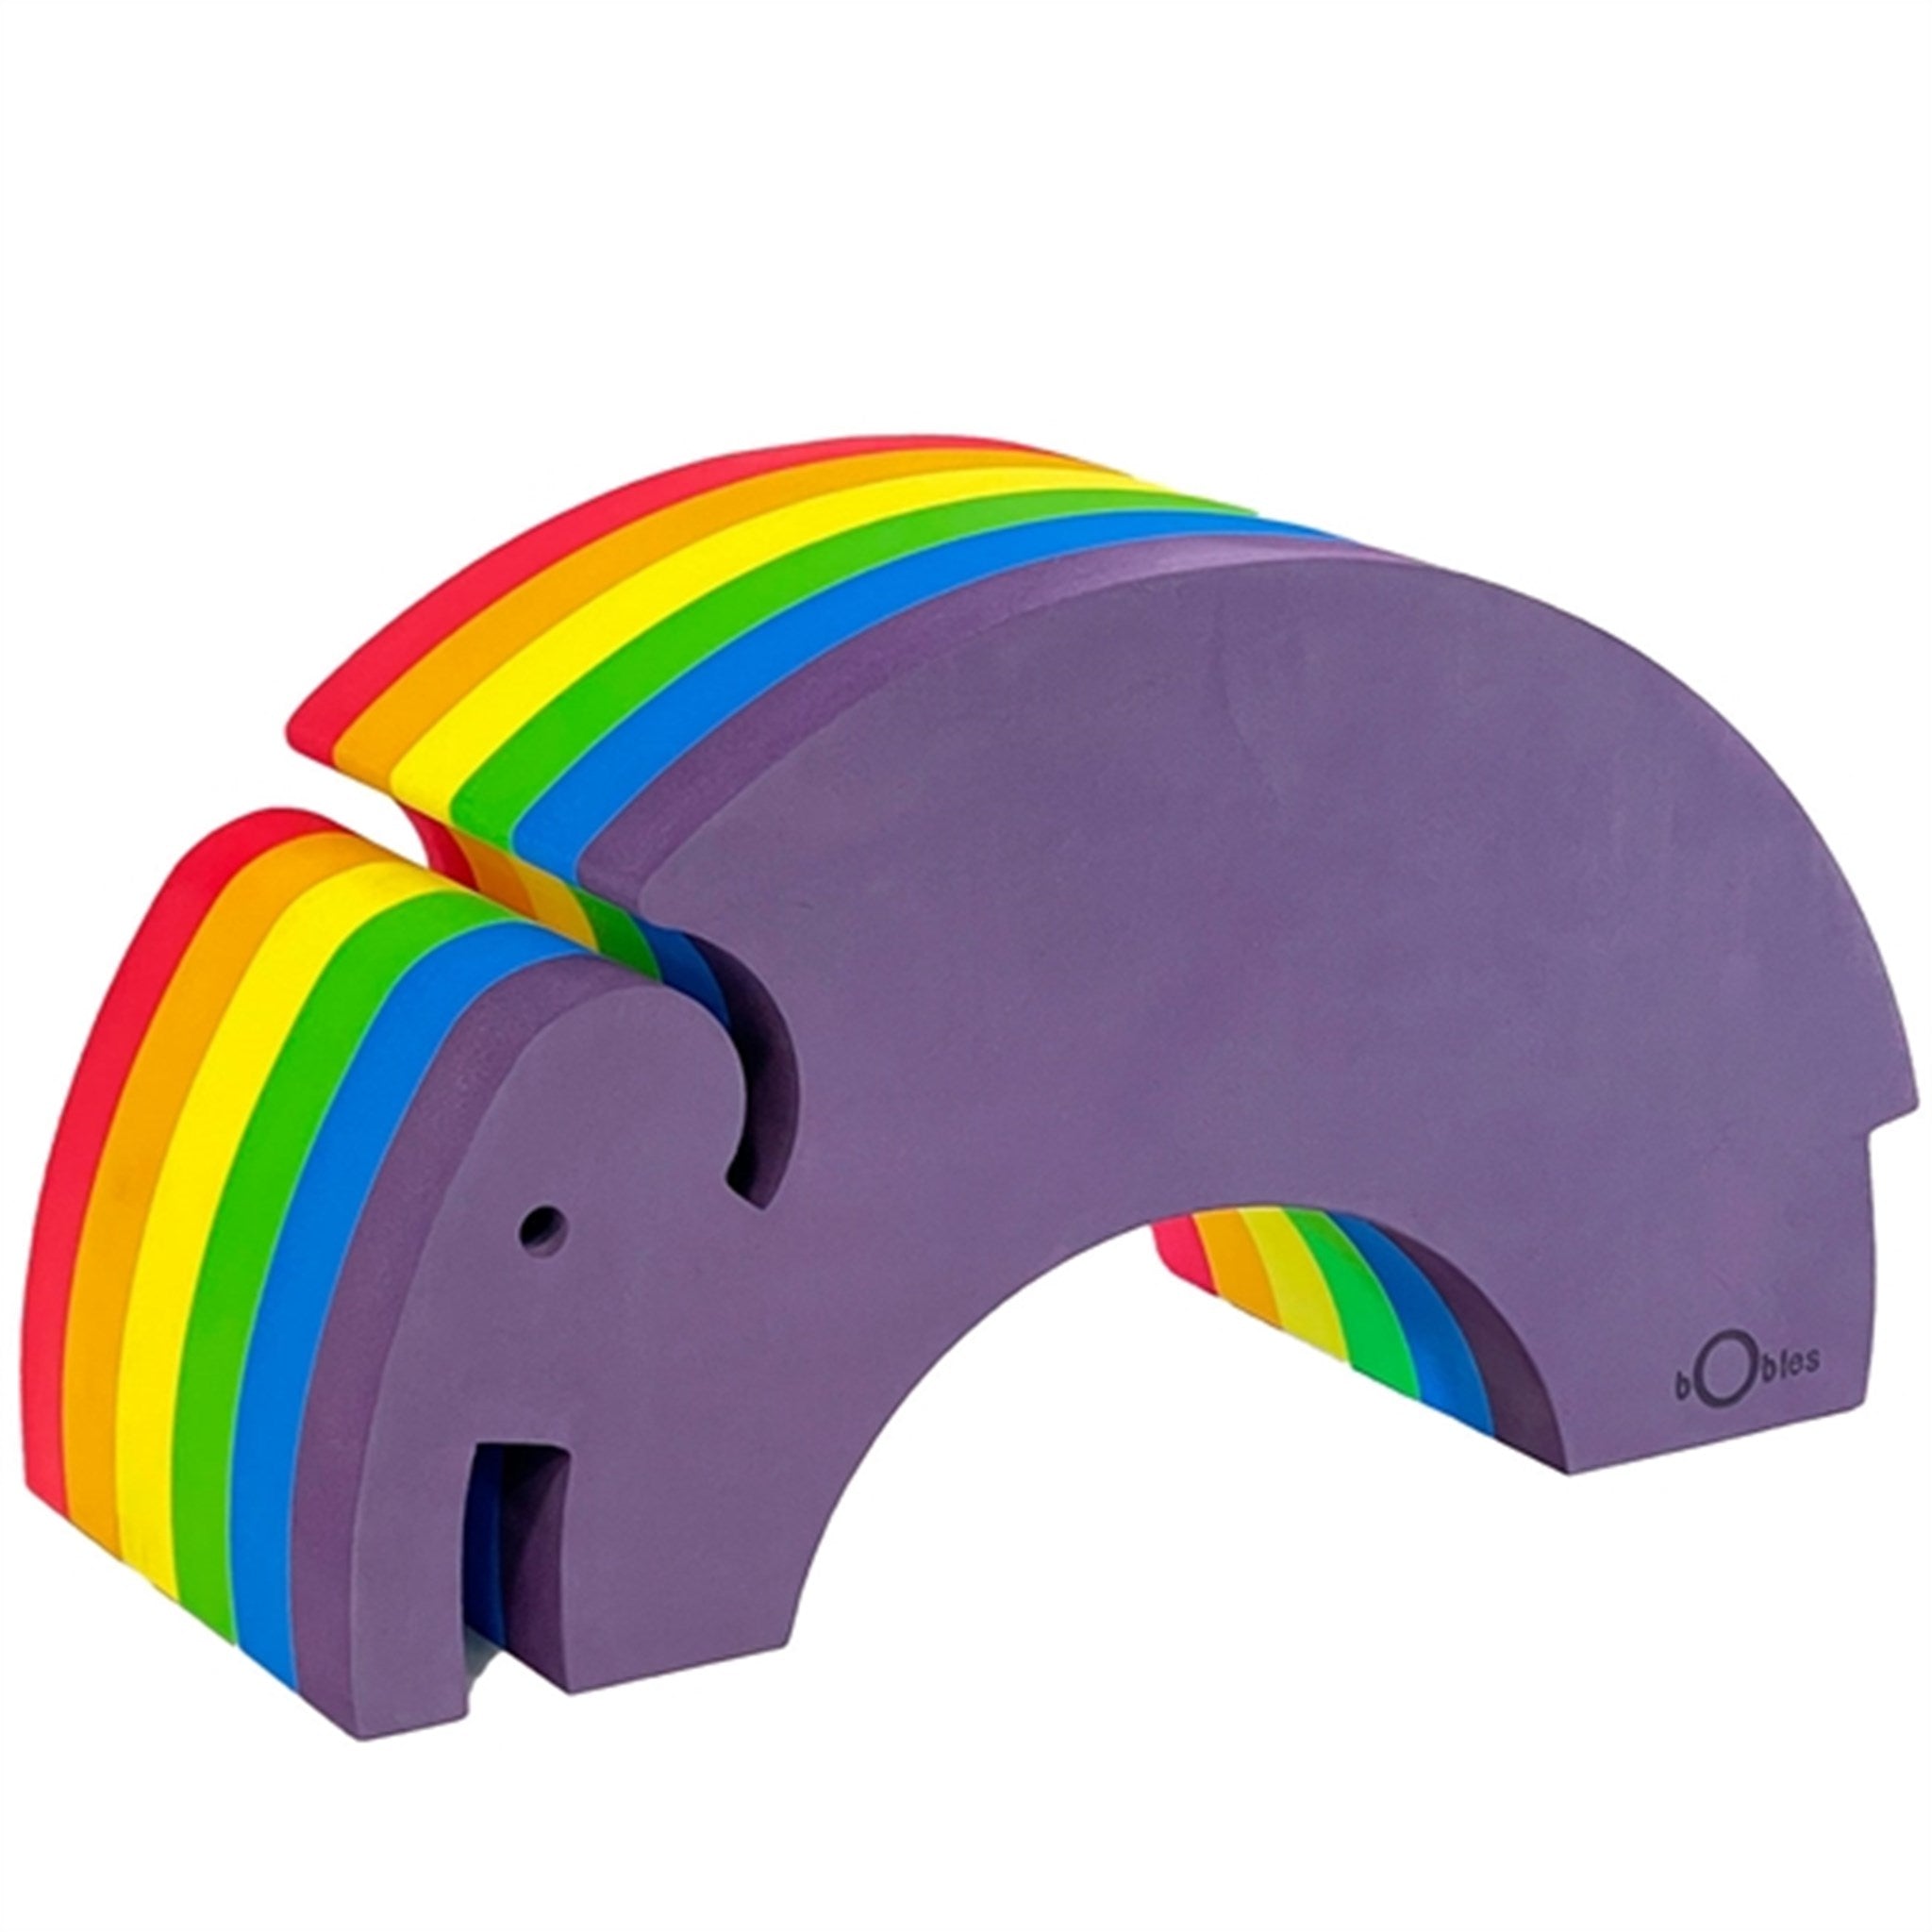 bObles Elephant L 24 Rainbow 3